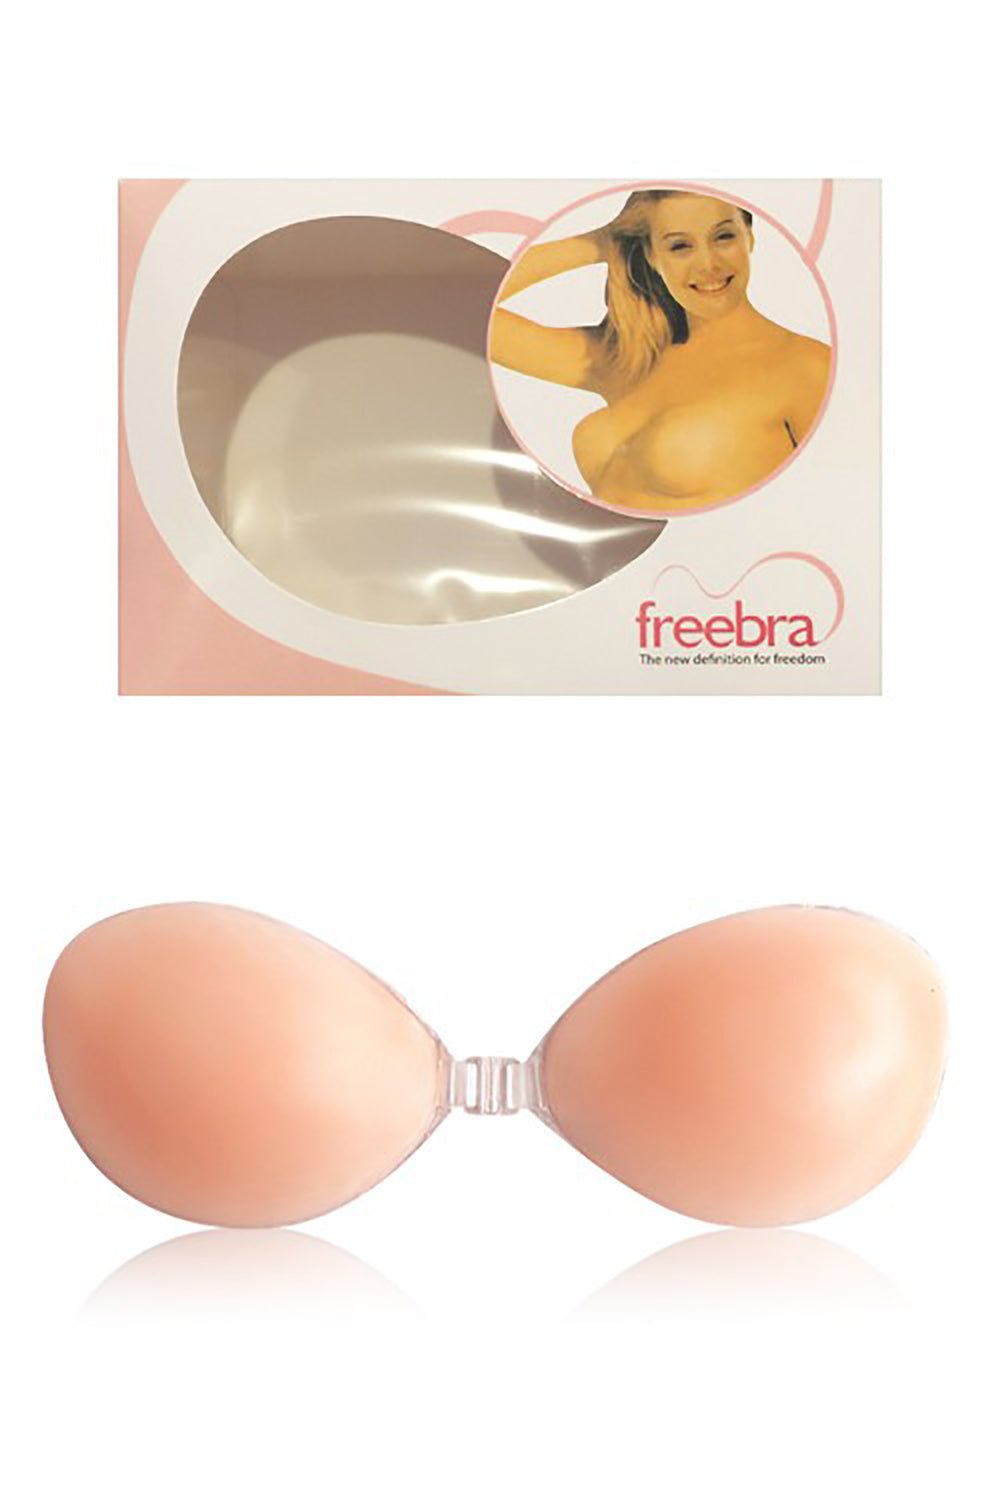 Freebra Bra Silicone - Transparent @ Best Price Online